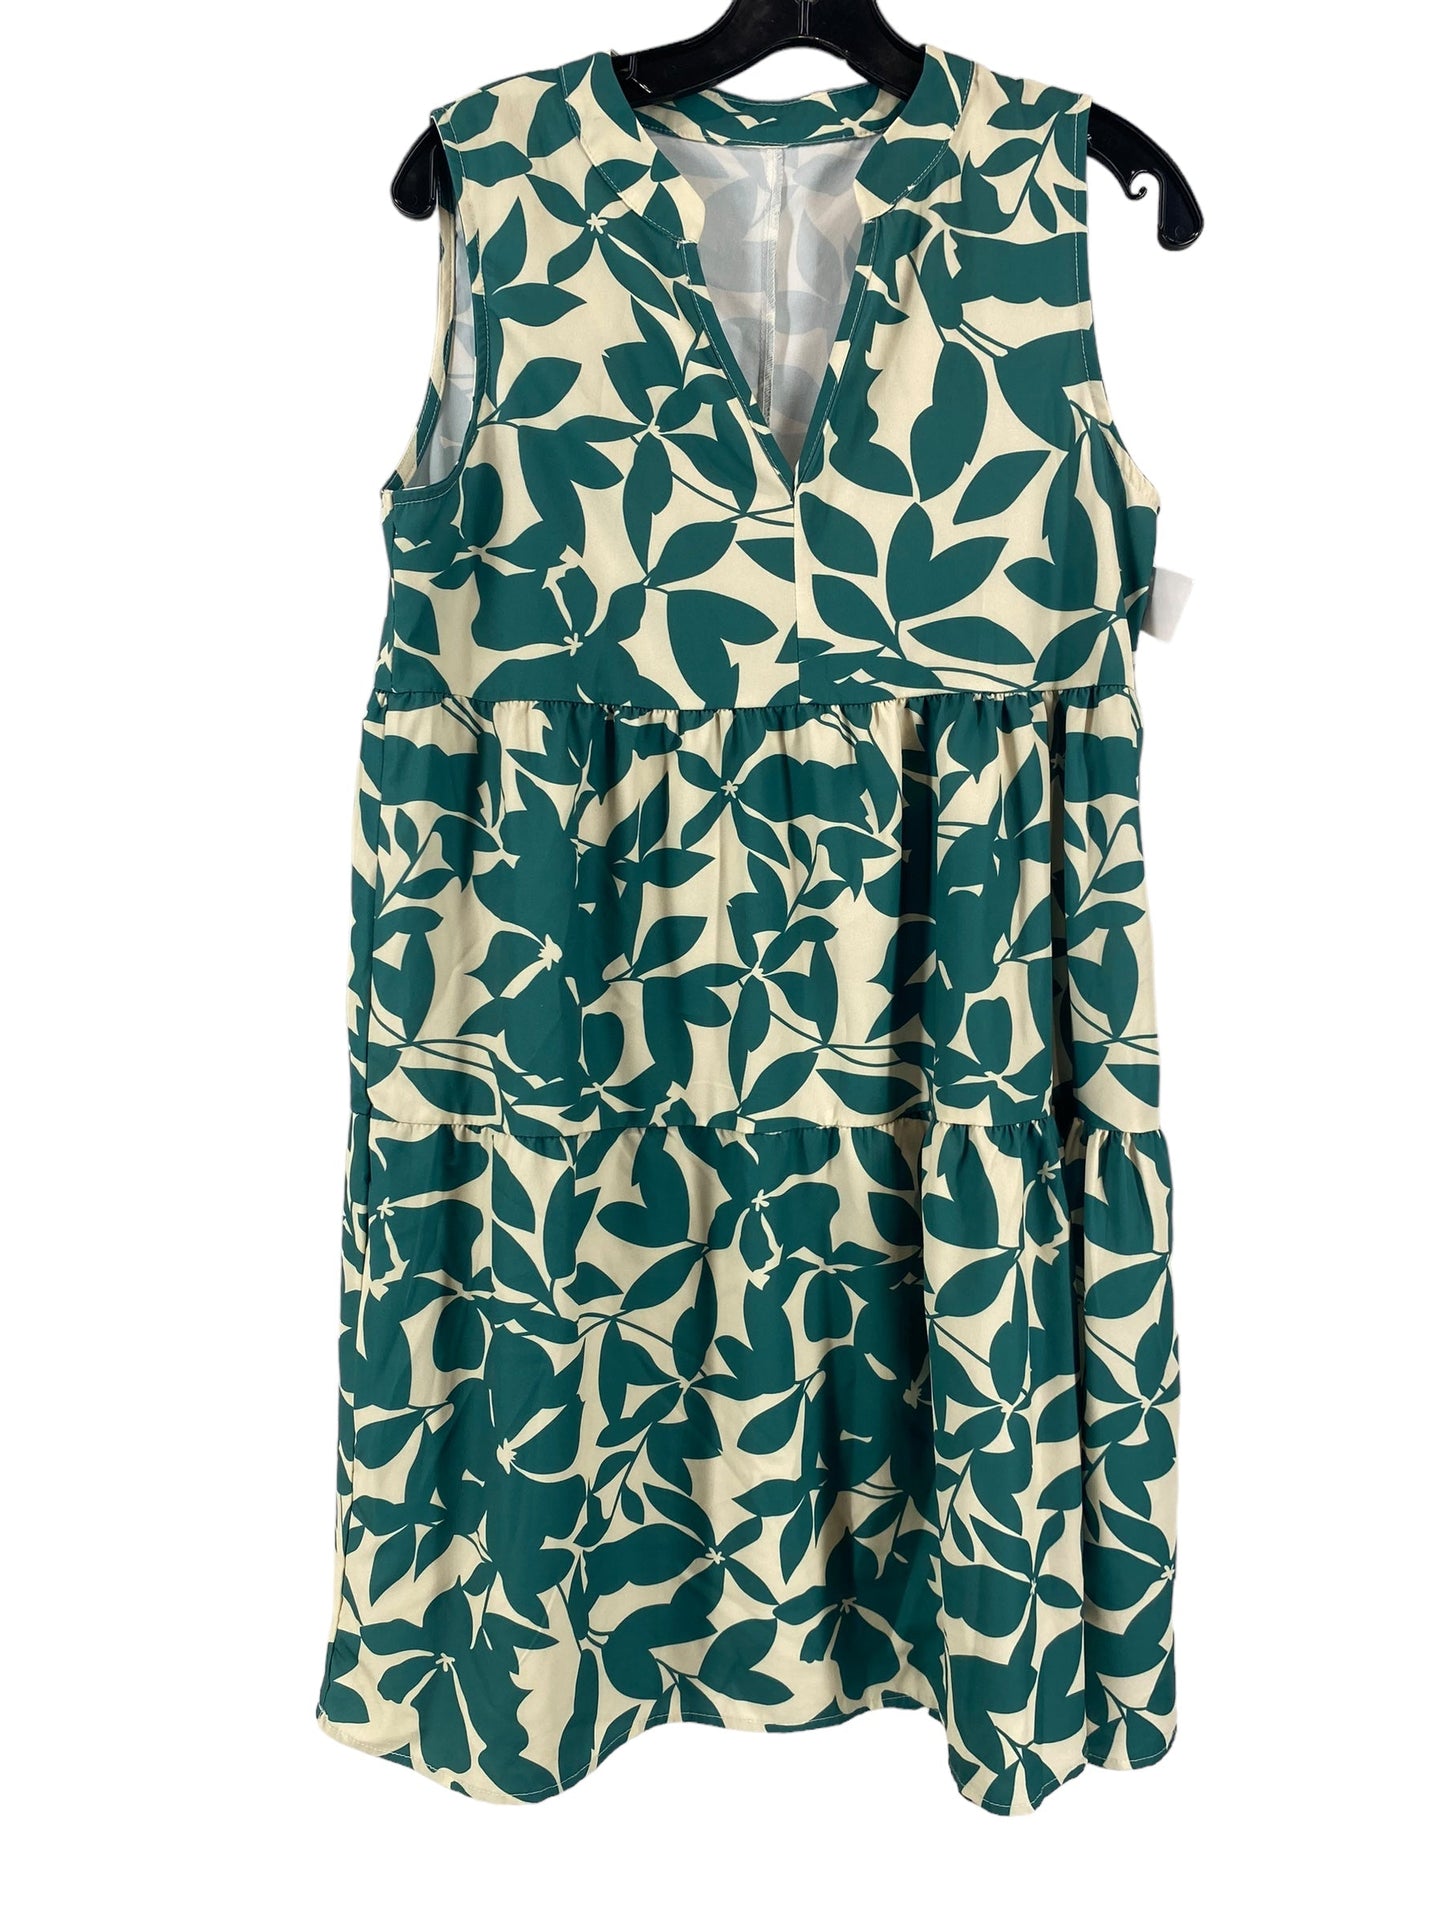 Tropical Print Dress Casual Short Shein, Size M